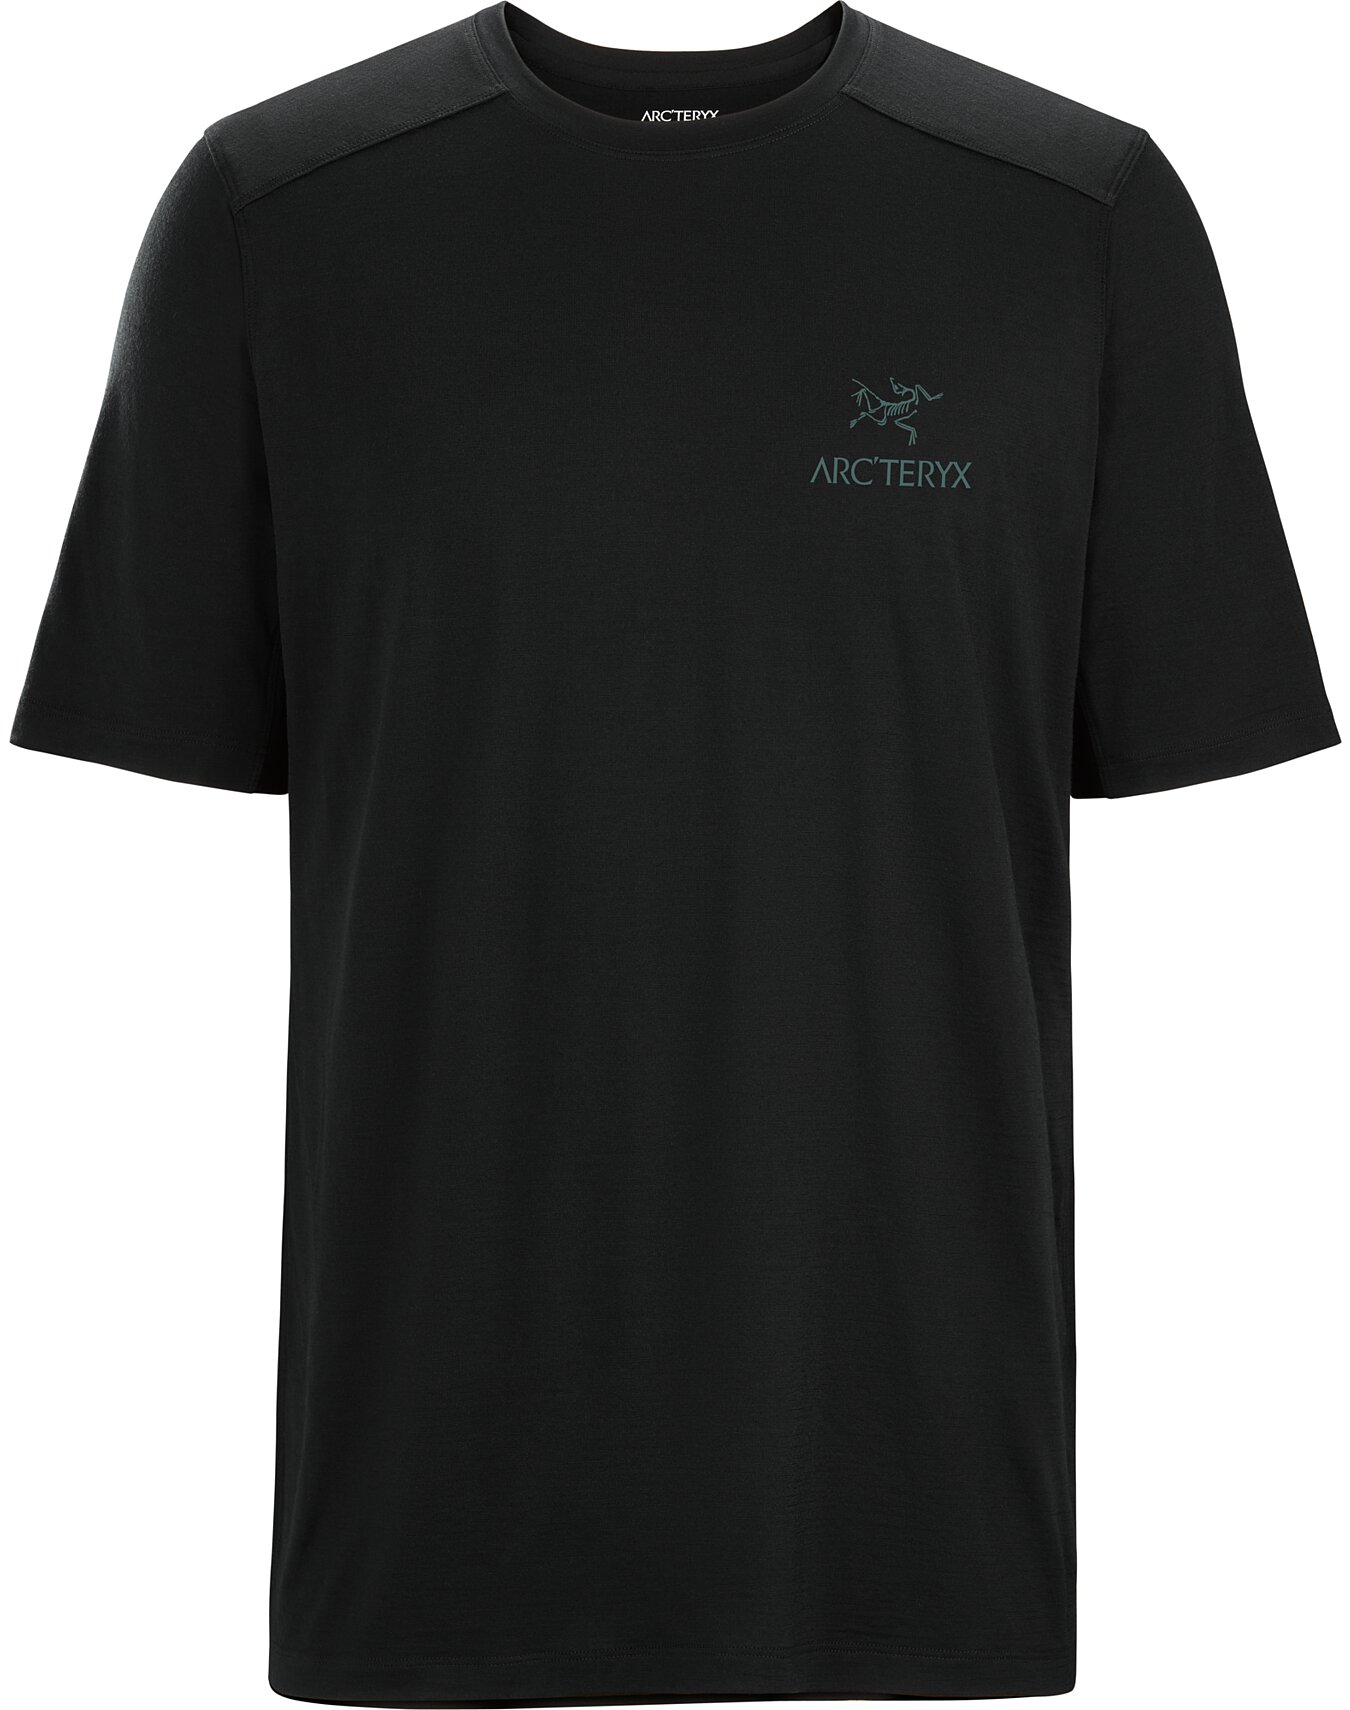 39sSMENs S  アークテリクス イオニア メリノ ウール アークワード ショートスリーブ Tシャツ Ionia Merino Wool Arcword Short Sleeve T-Shirt ARCTERYX X000006537 002291 Black ブラック系